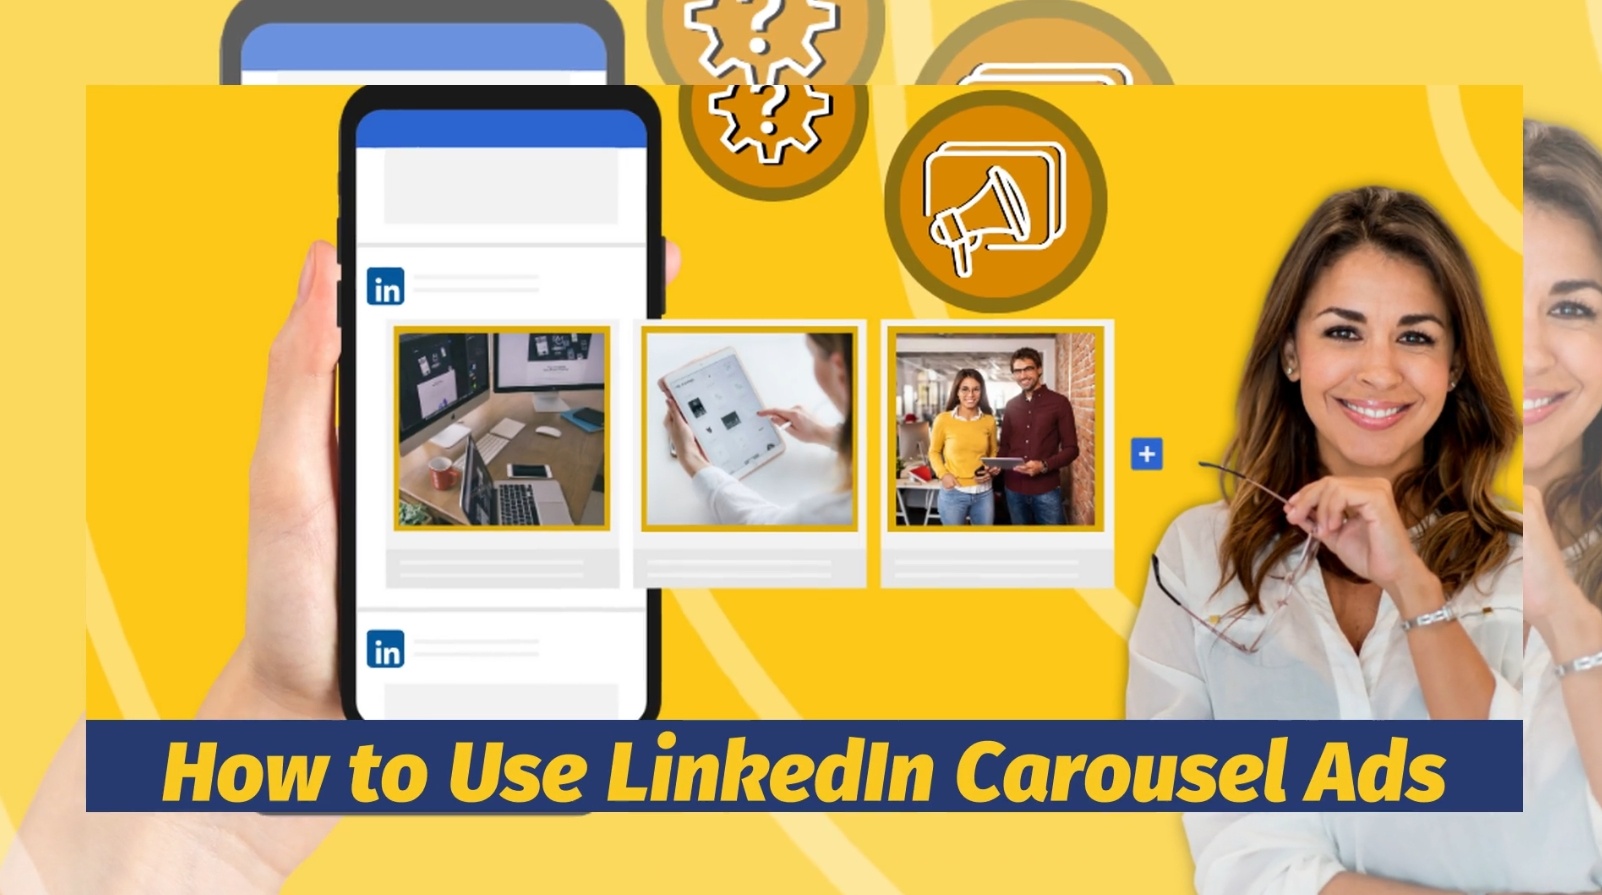 How to Use LinkedIn Carousel Ads